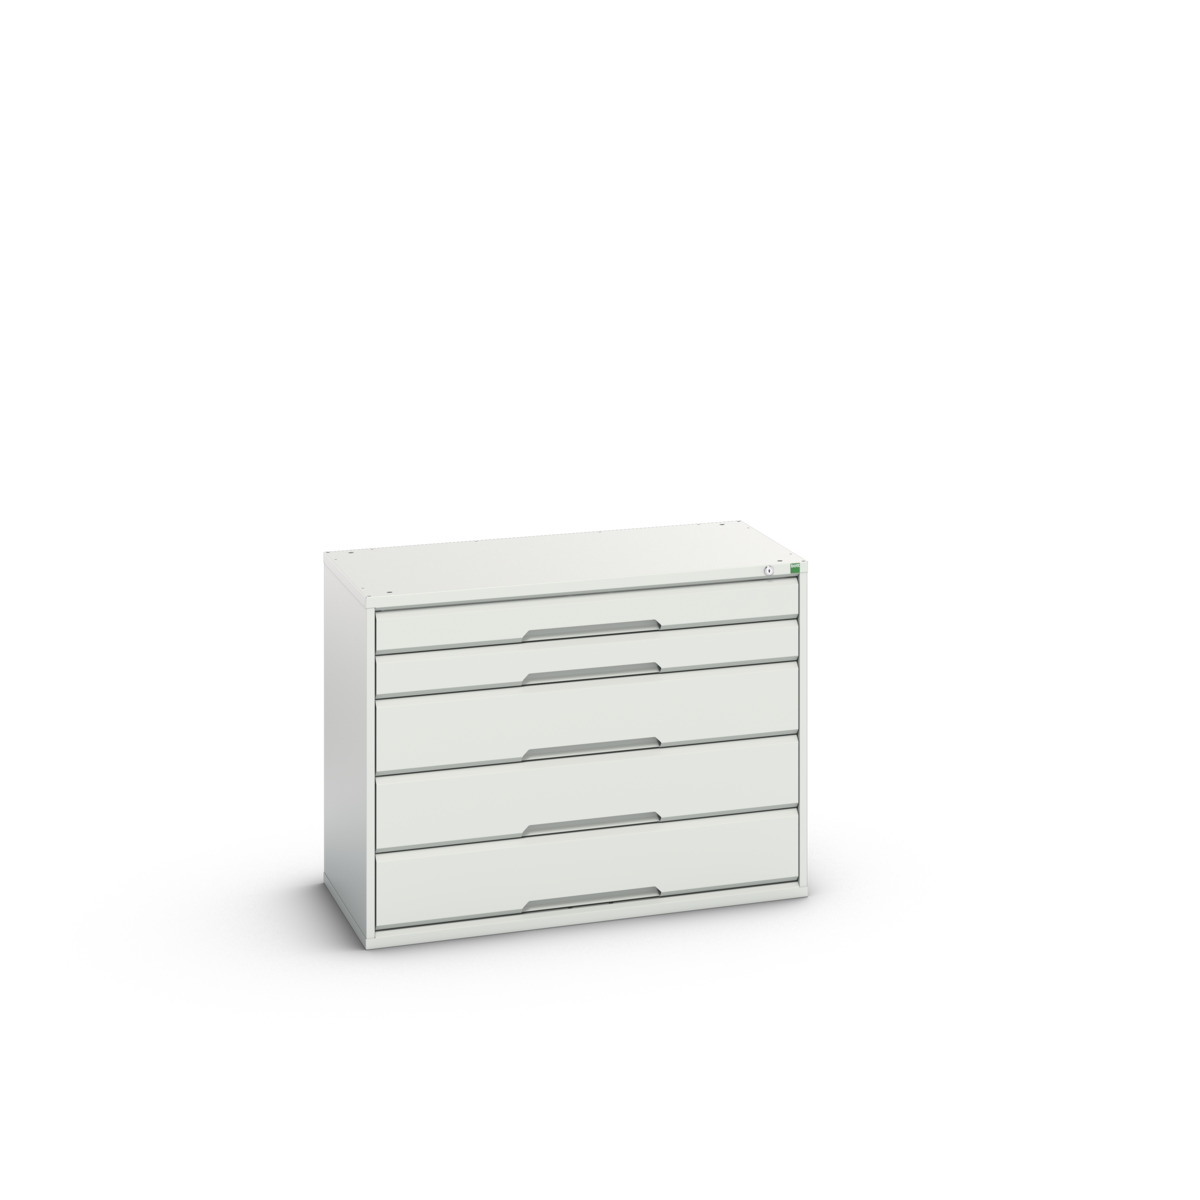 16925512.16 - verso drawer cabinet